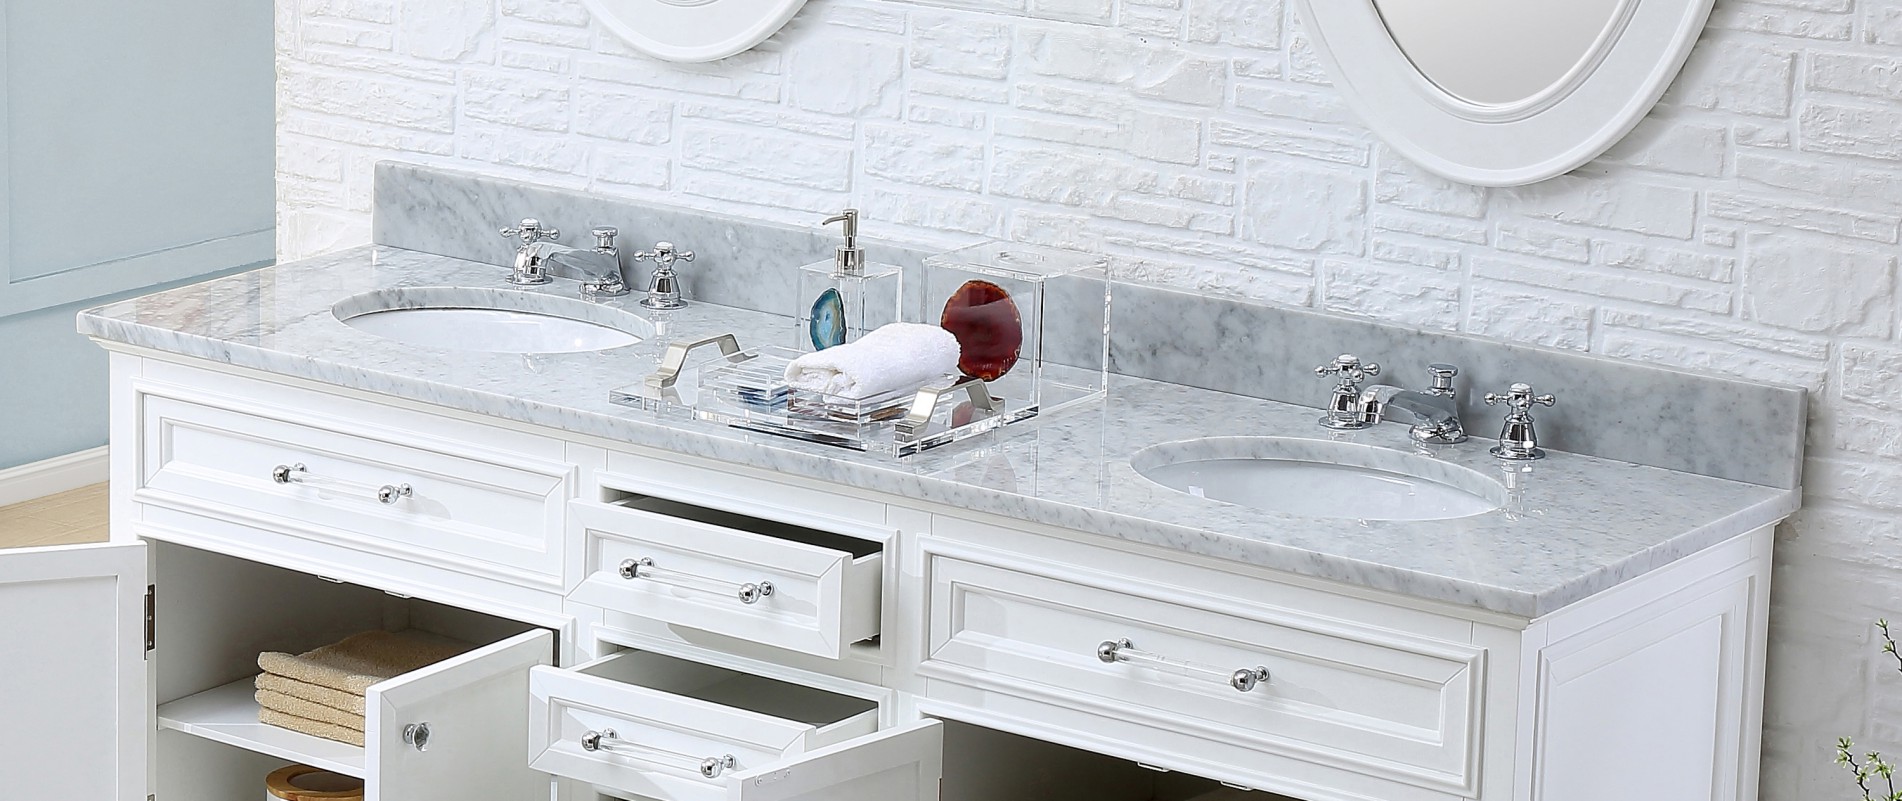 72 inch Traditional Double Sink Bathroom Vanity Marble Countertop